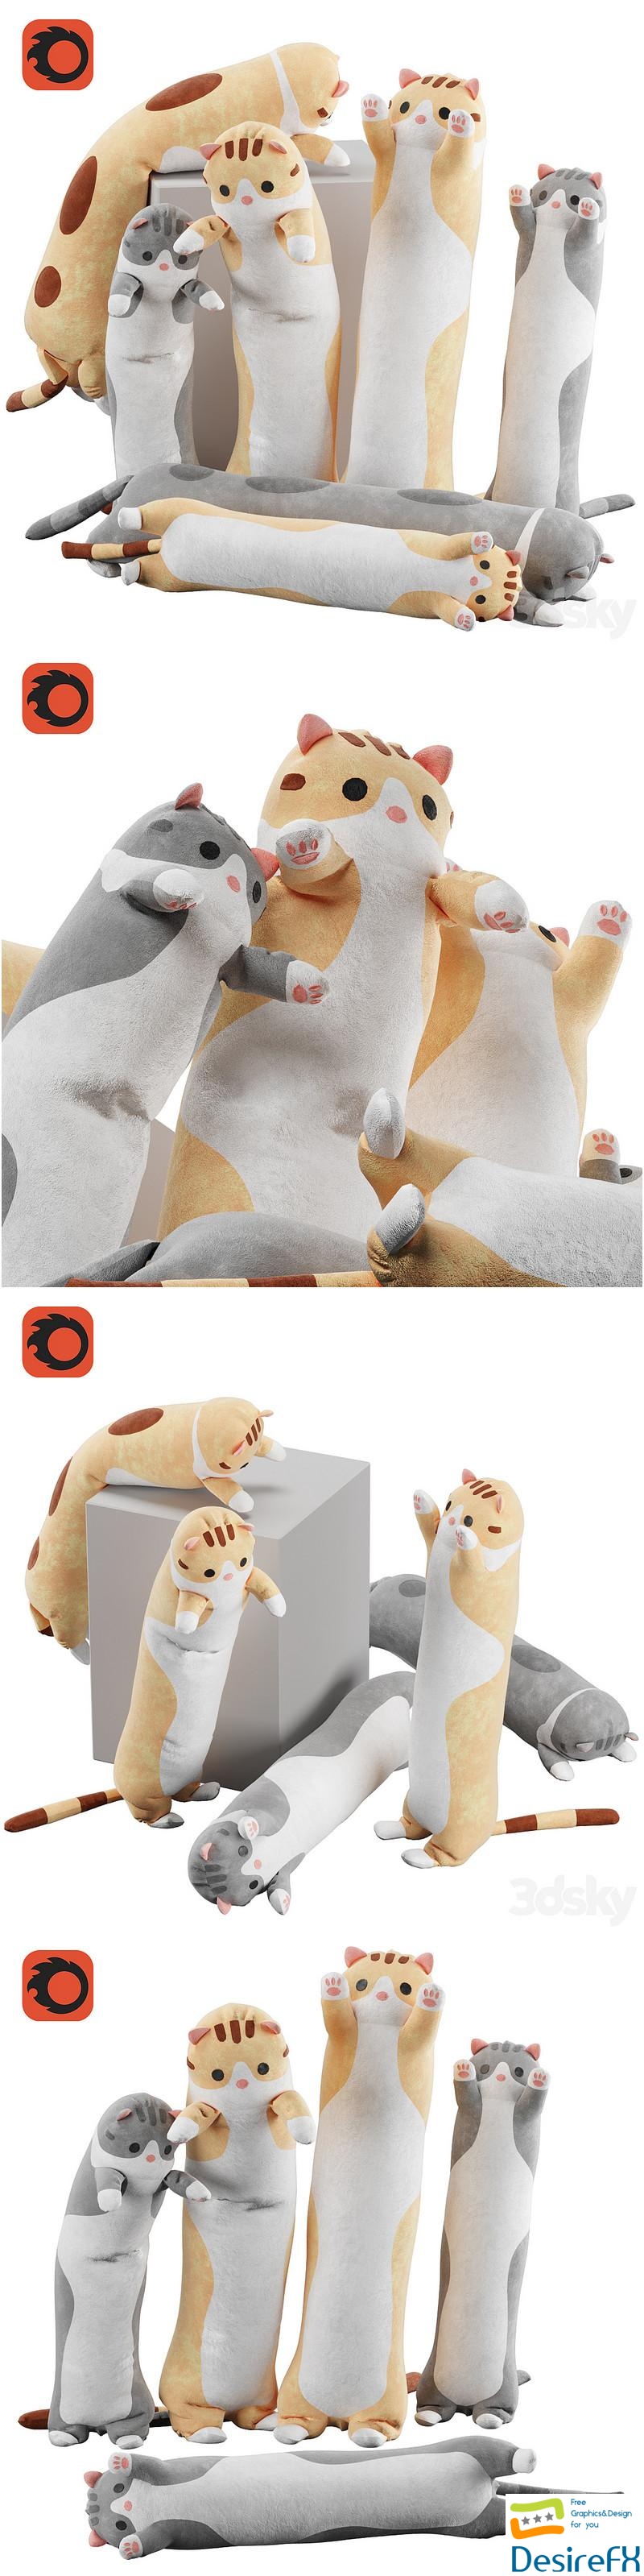 Stuffed plush toy, cat from aliexpress 3D Model